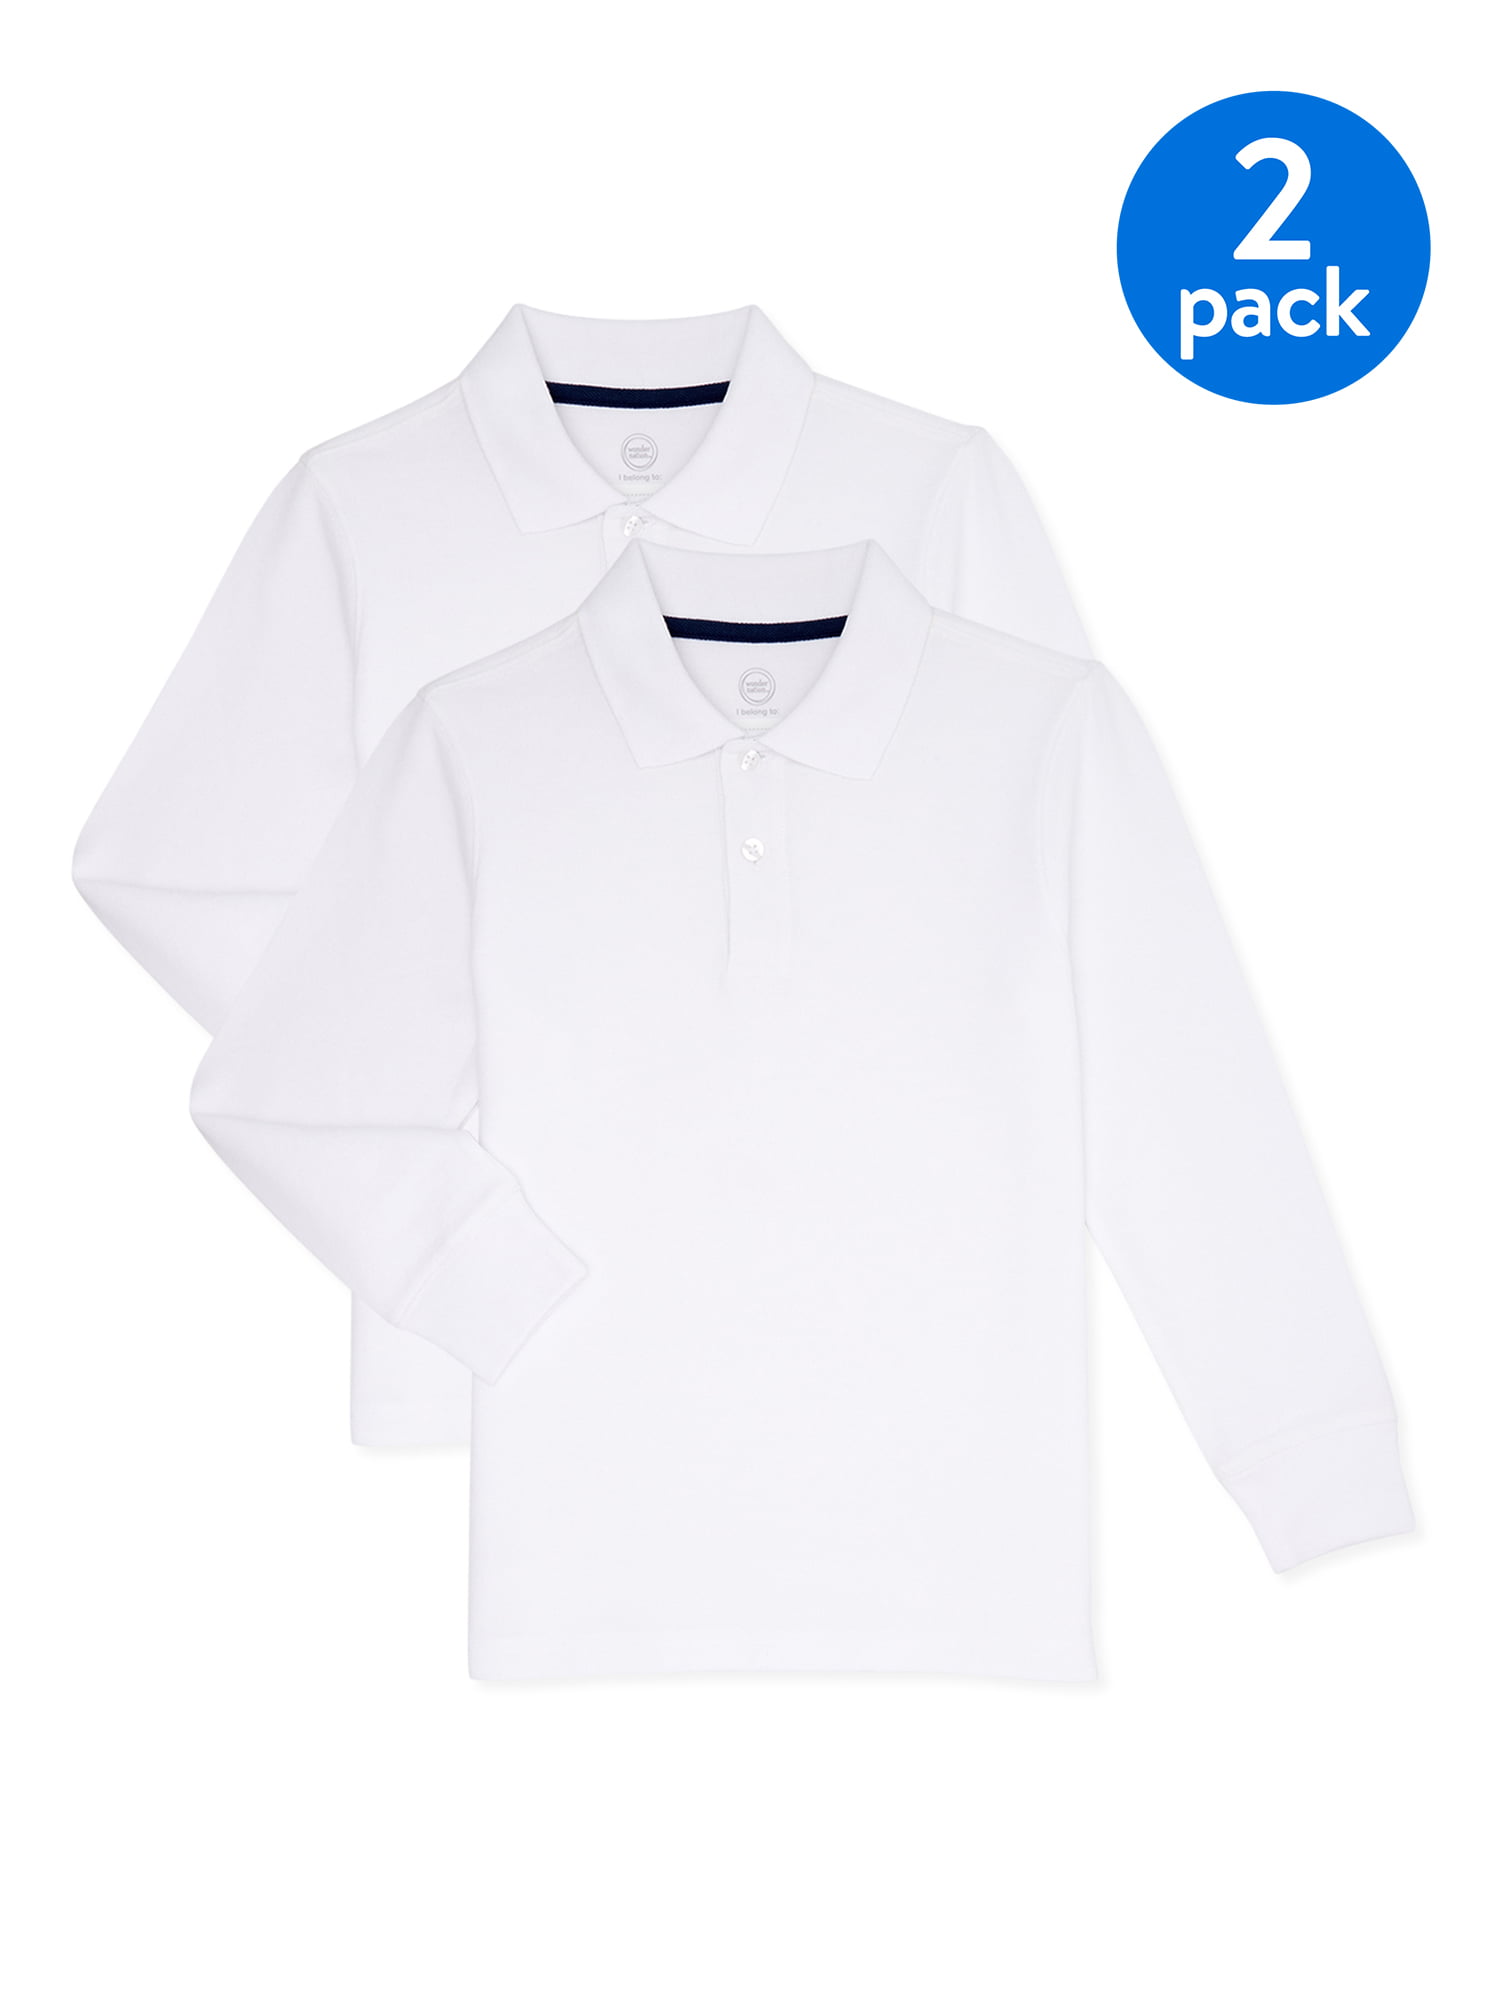 Boys Nautica $28 White Uniform Long Sleeved Polo Shirt Size 6-14/16 